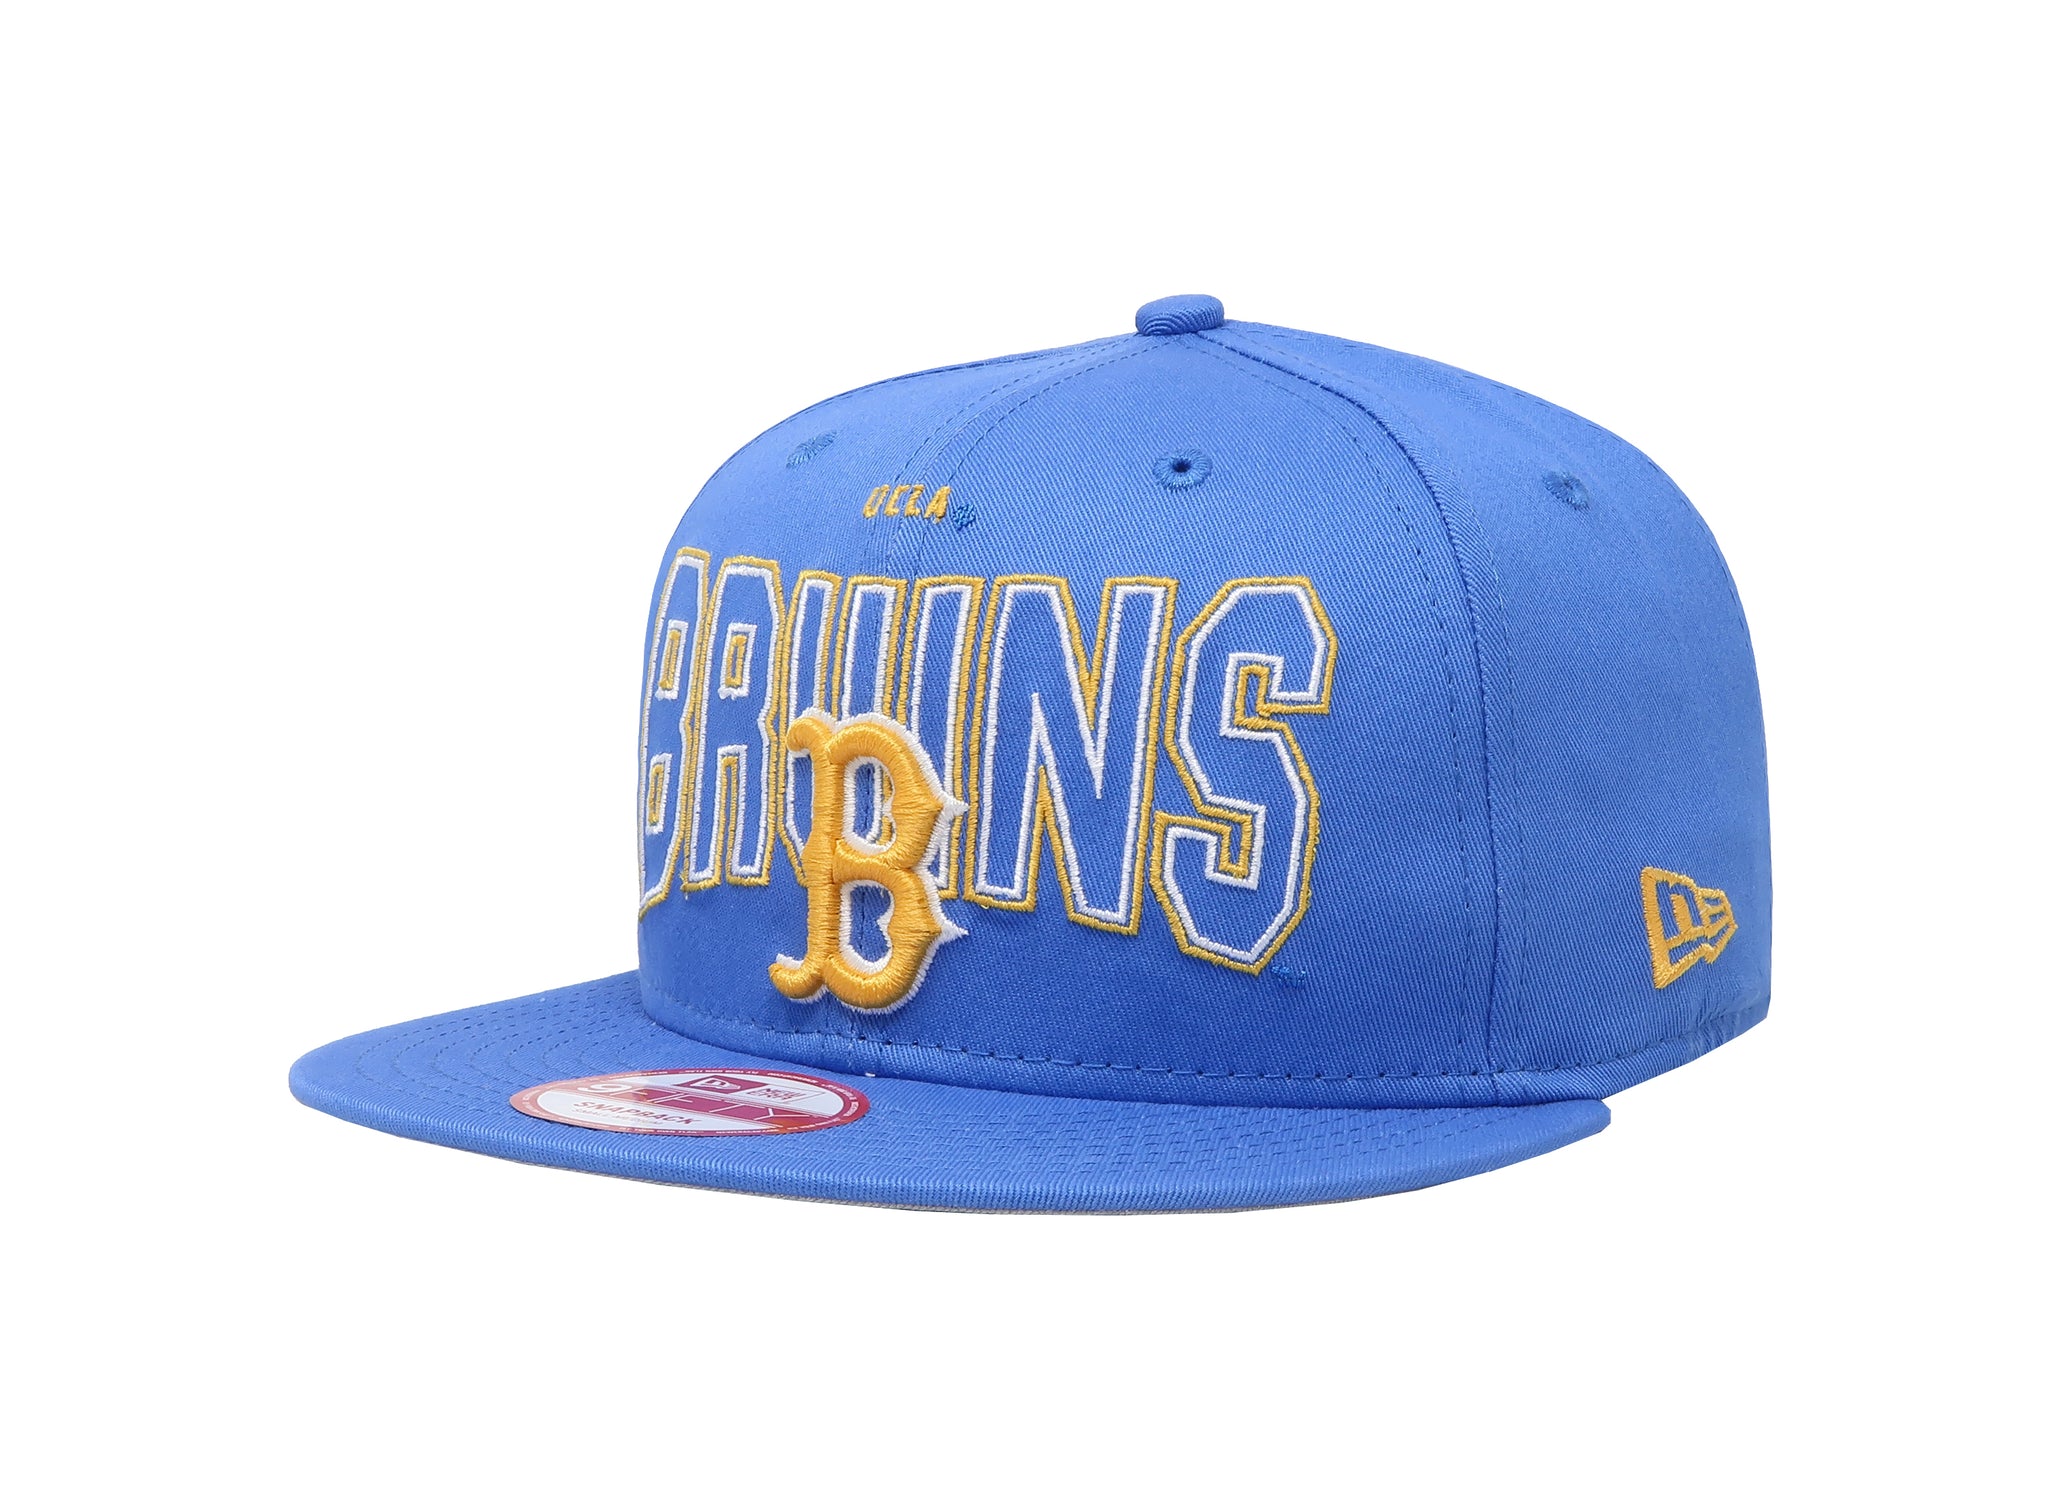 New Era 9Fifty Men's UCLA Bruins Football Sky Blue Snapback Cap